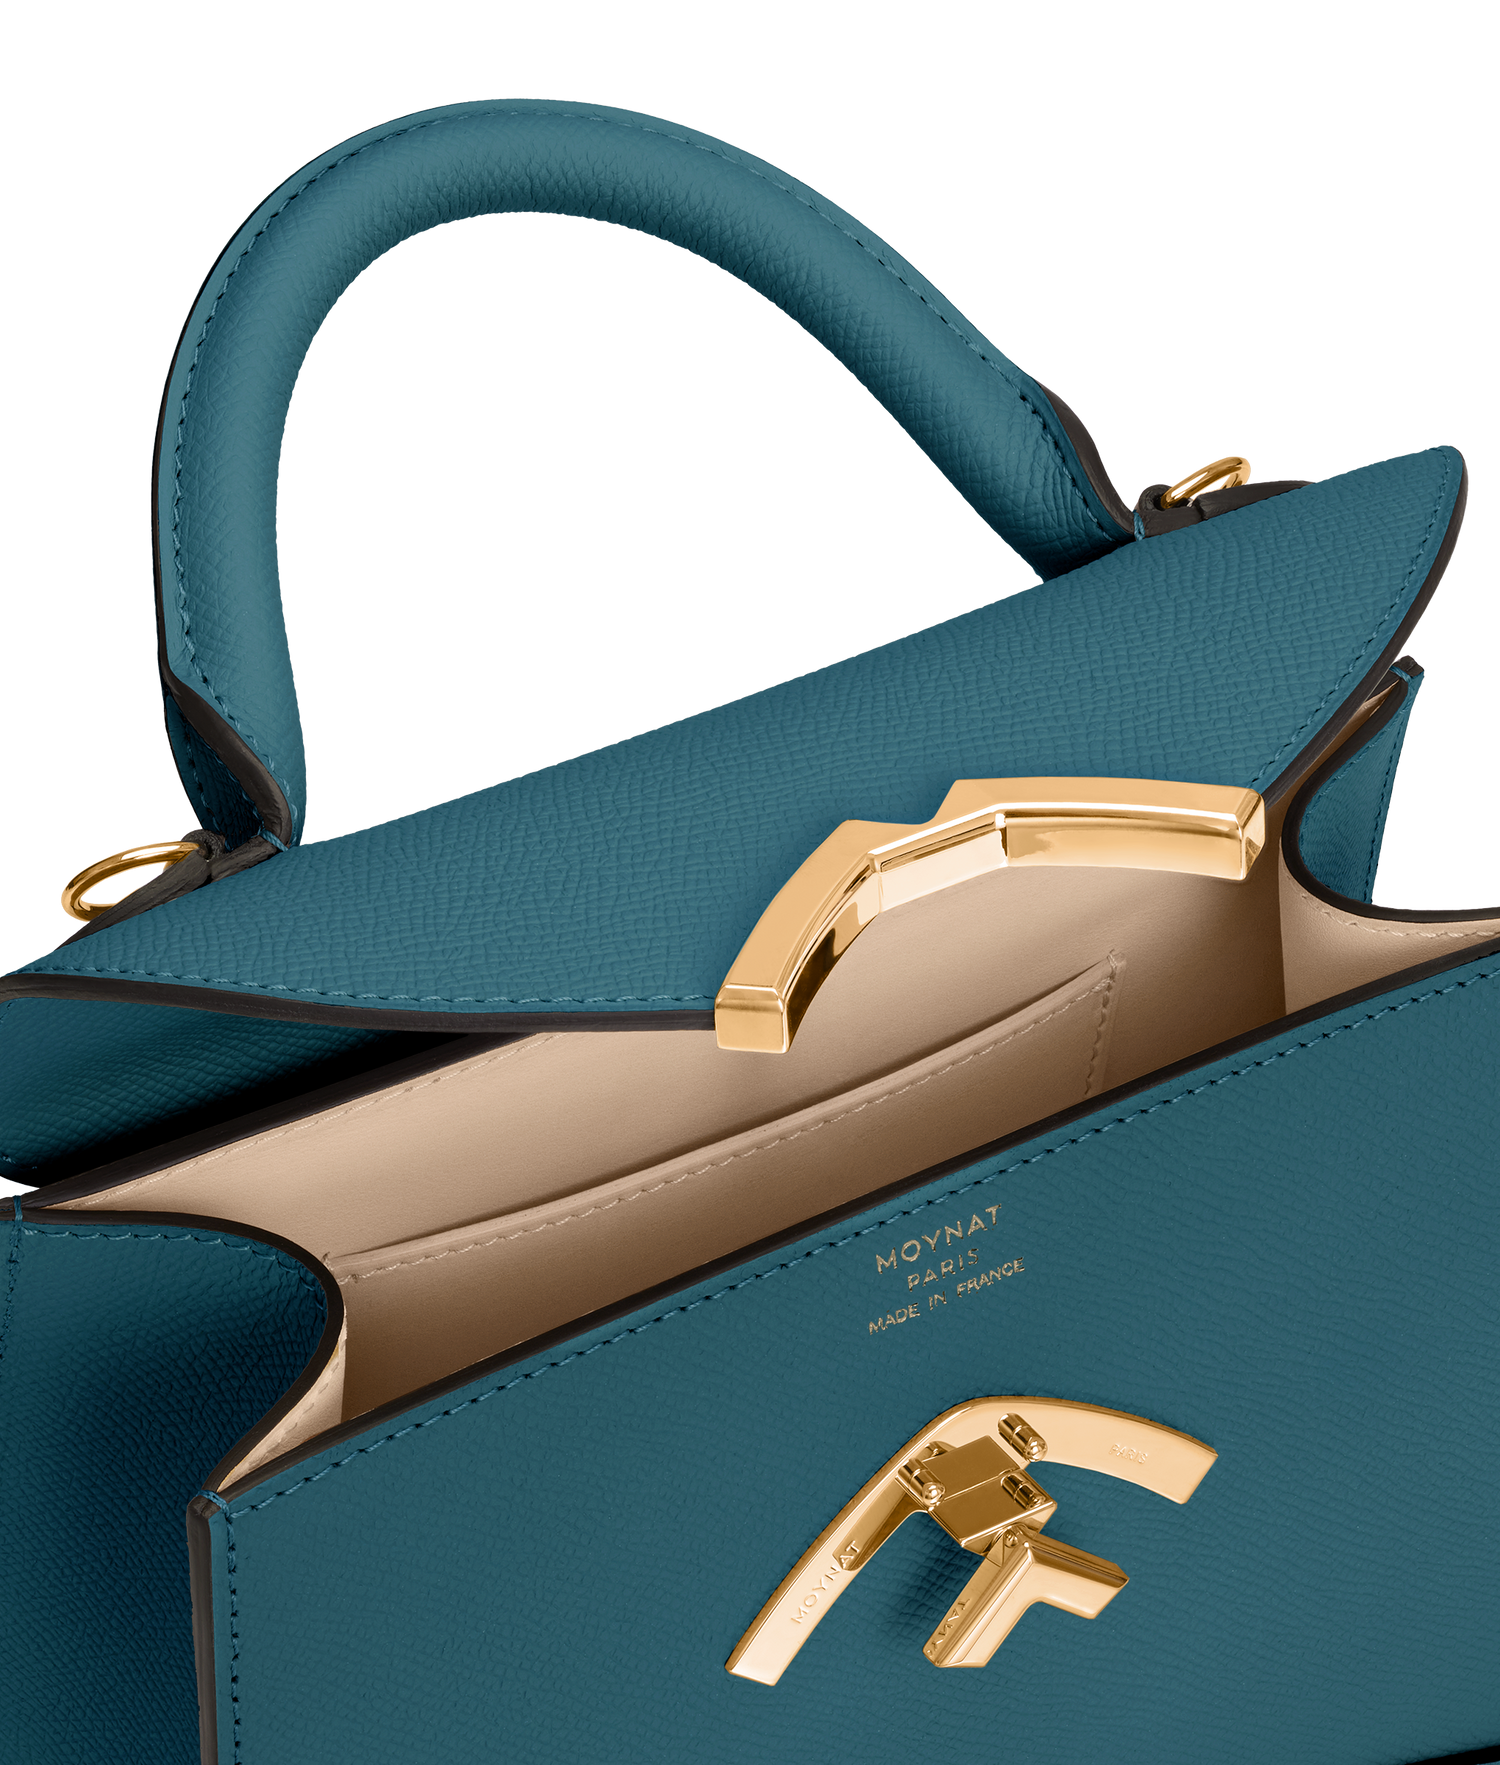 Moynat Gabrielle BB - Blue Satchels, Handbags - MOYNA20052